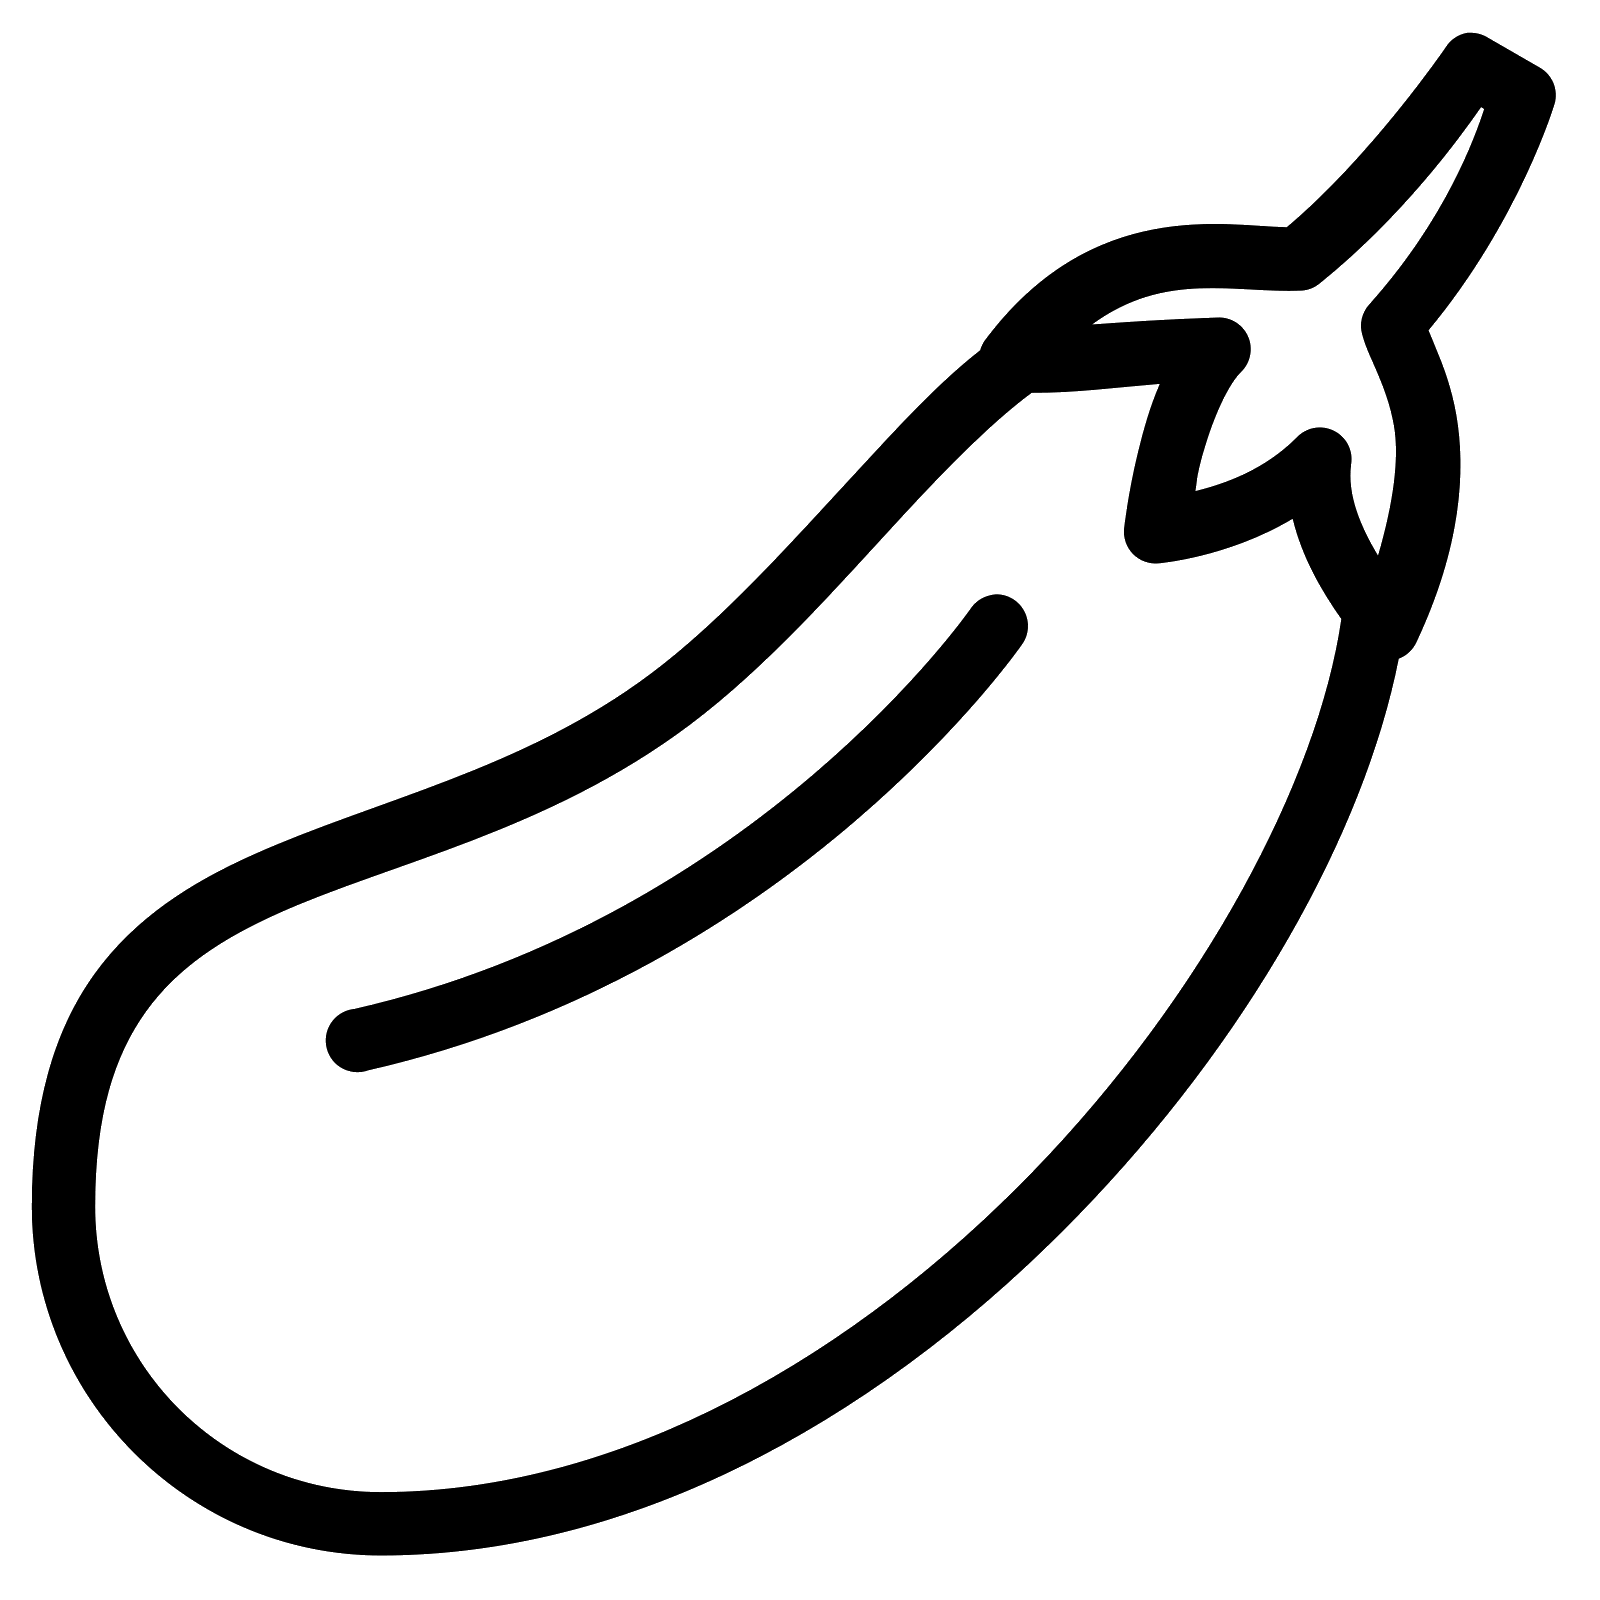 Clip art . Eggplant clipart black and white